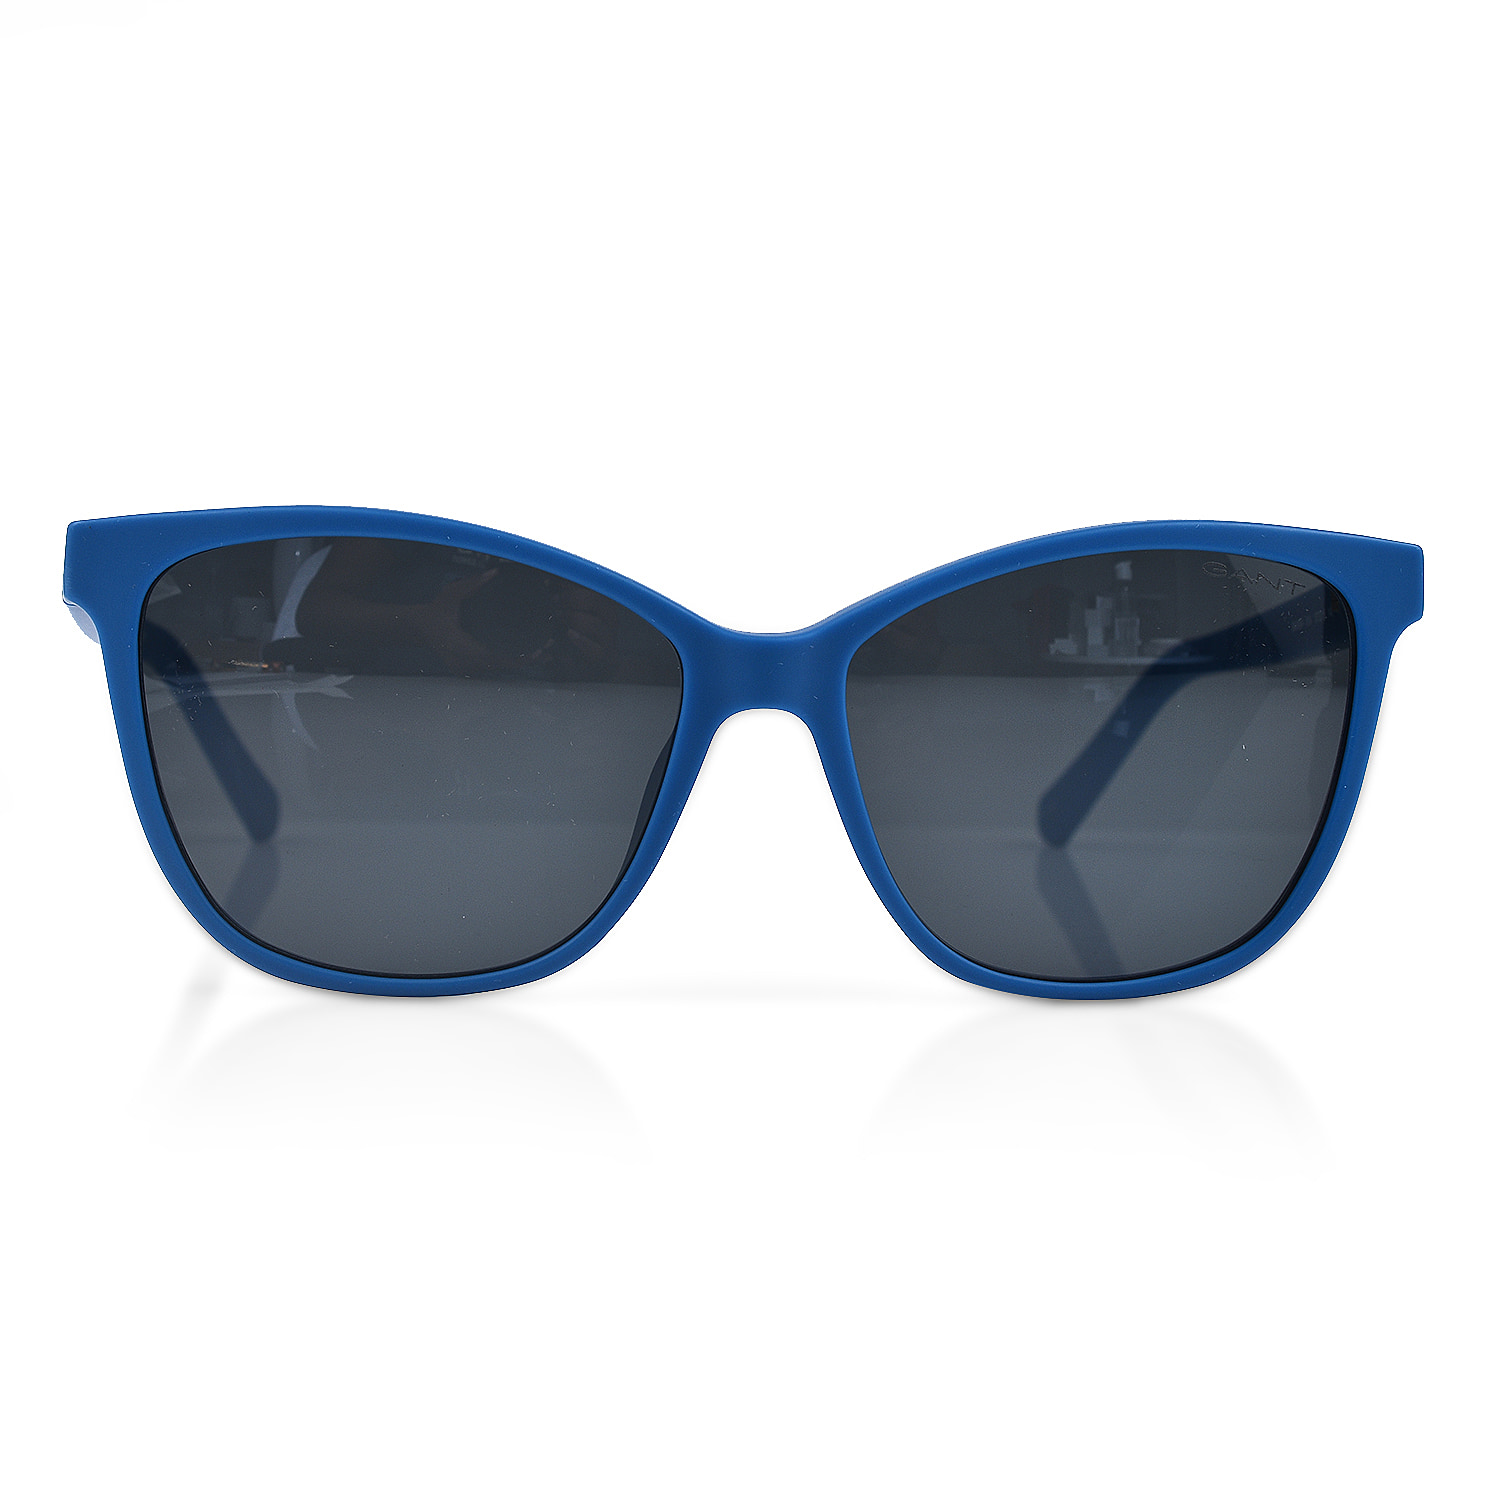 GANT UV Protected Royal Blue Sunglasses with Black Lenses